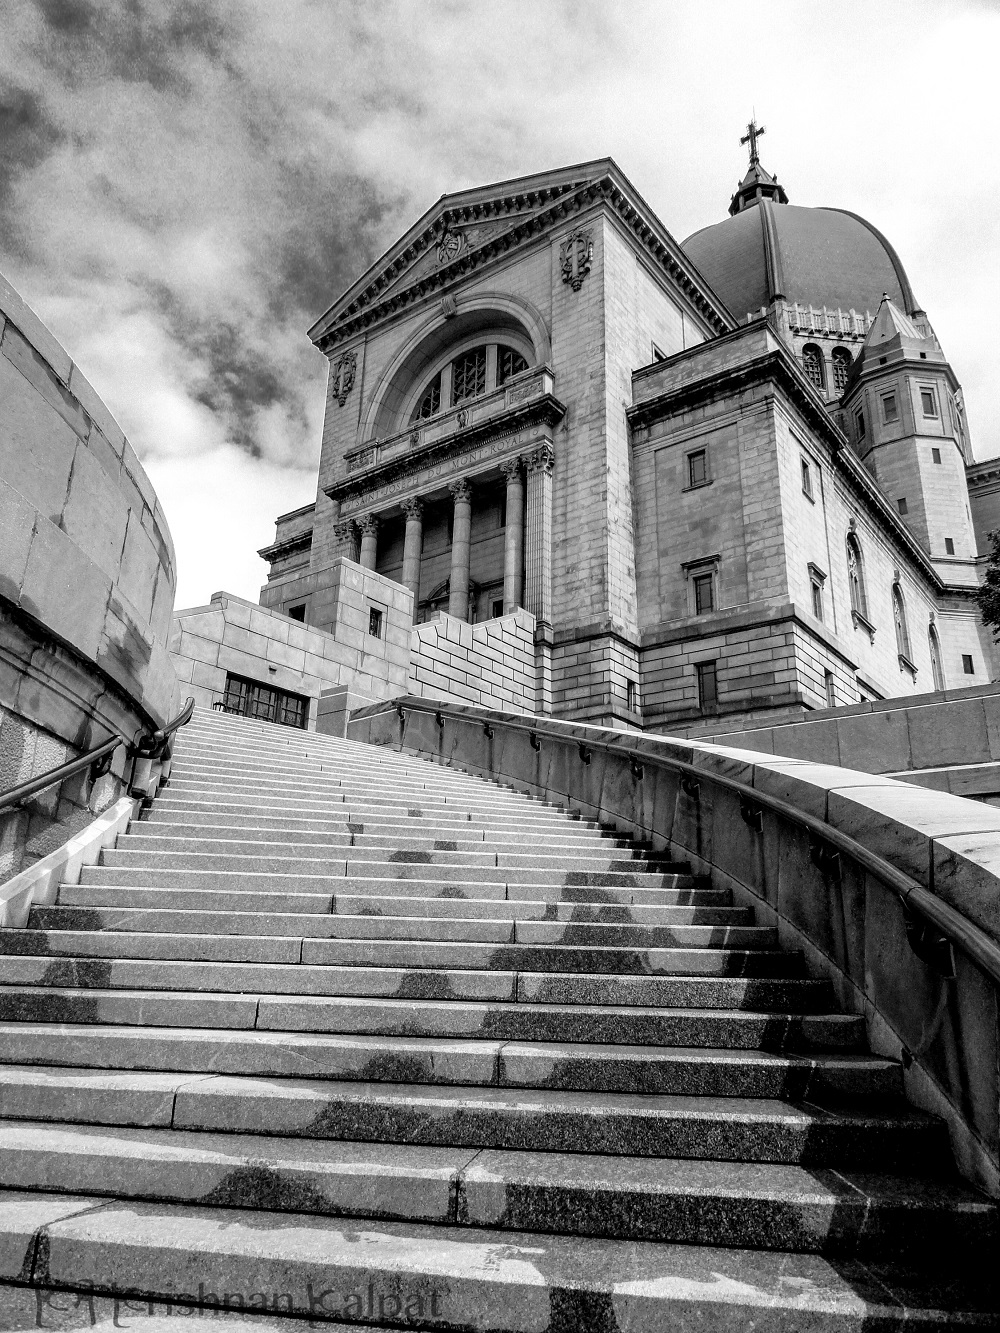 © Saint Joseph's Oratory of Mount Royal in Montreal, Canada by Photographer Krishnan Kalpat